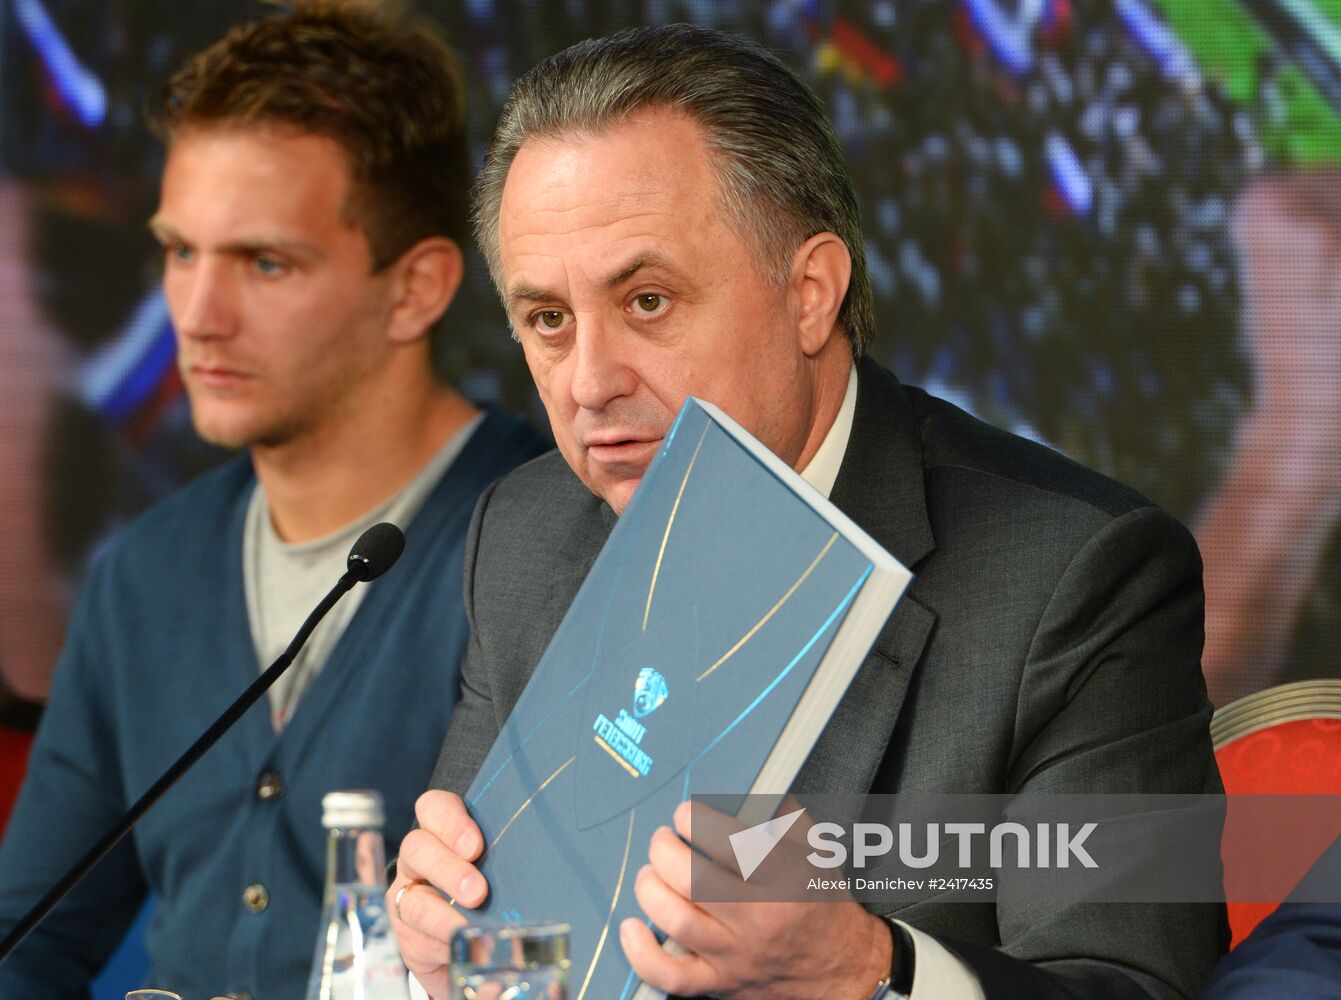 Presentation of Euro 2020 Bid Book